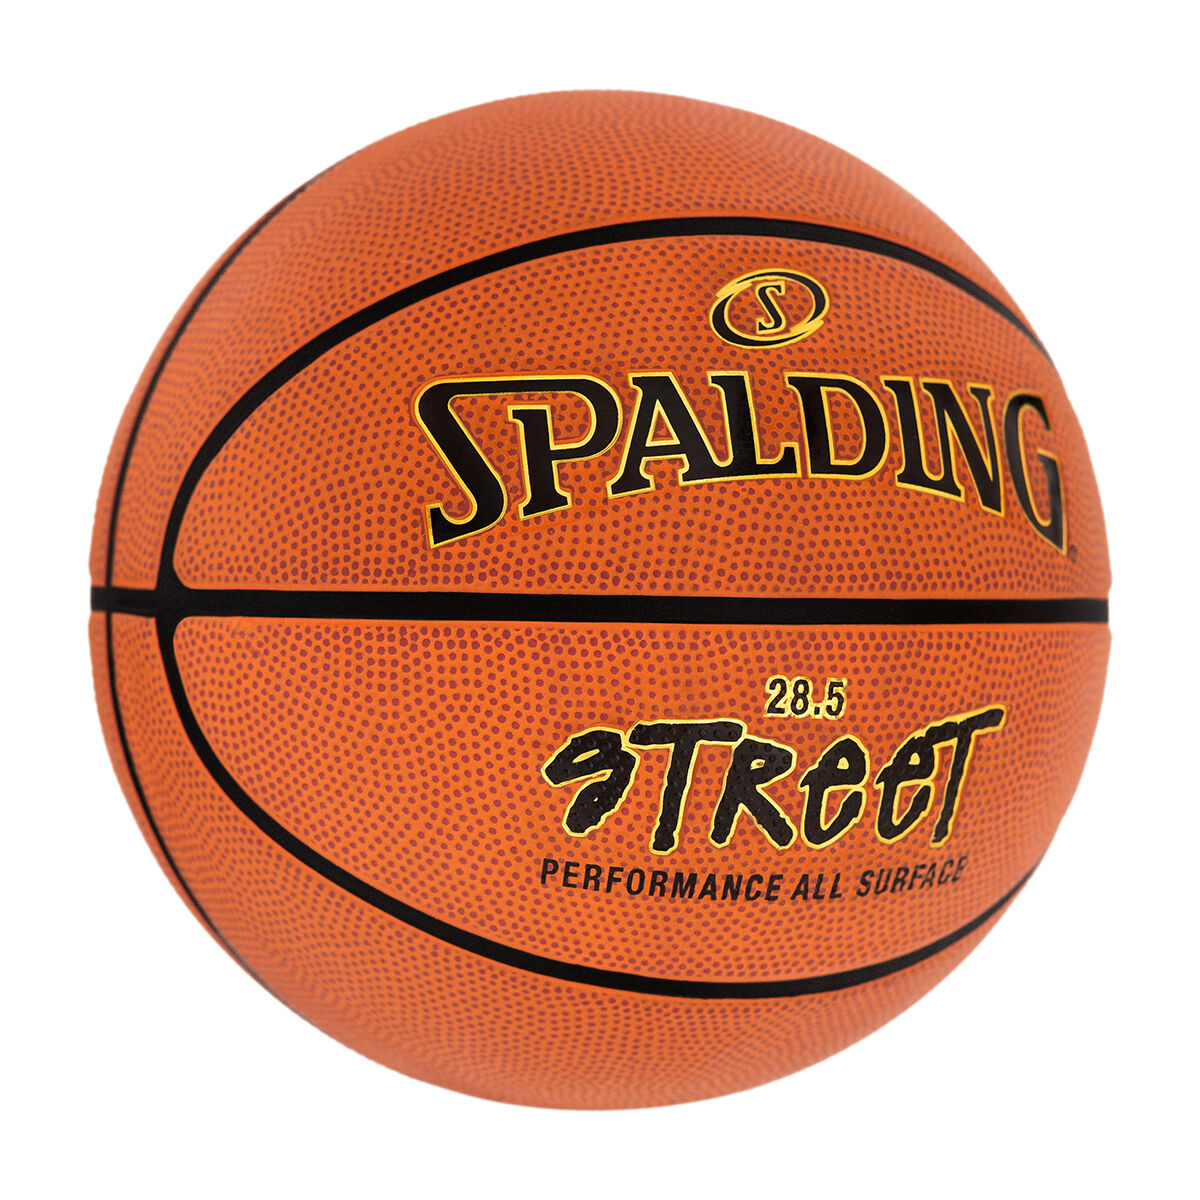 Spalding Street Outdoor Basketball - 28.5